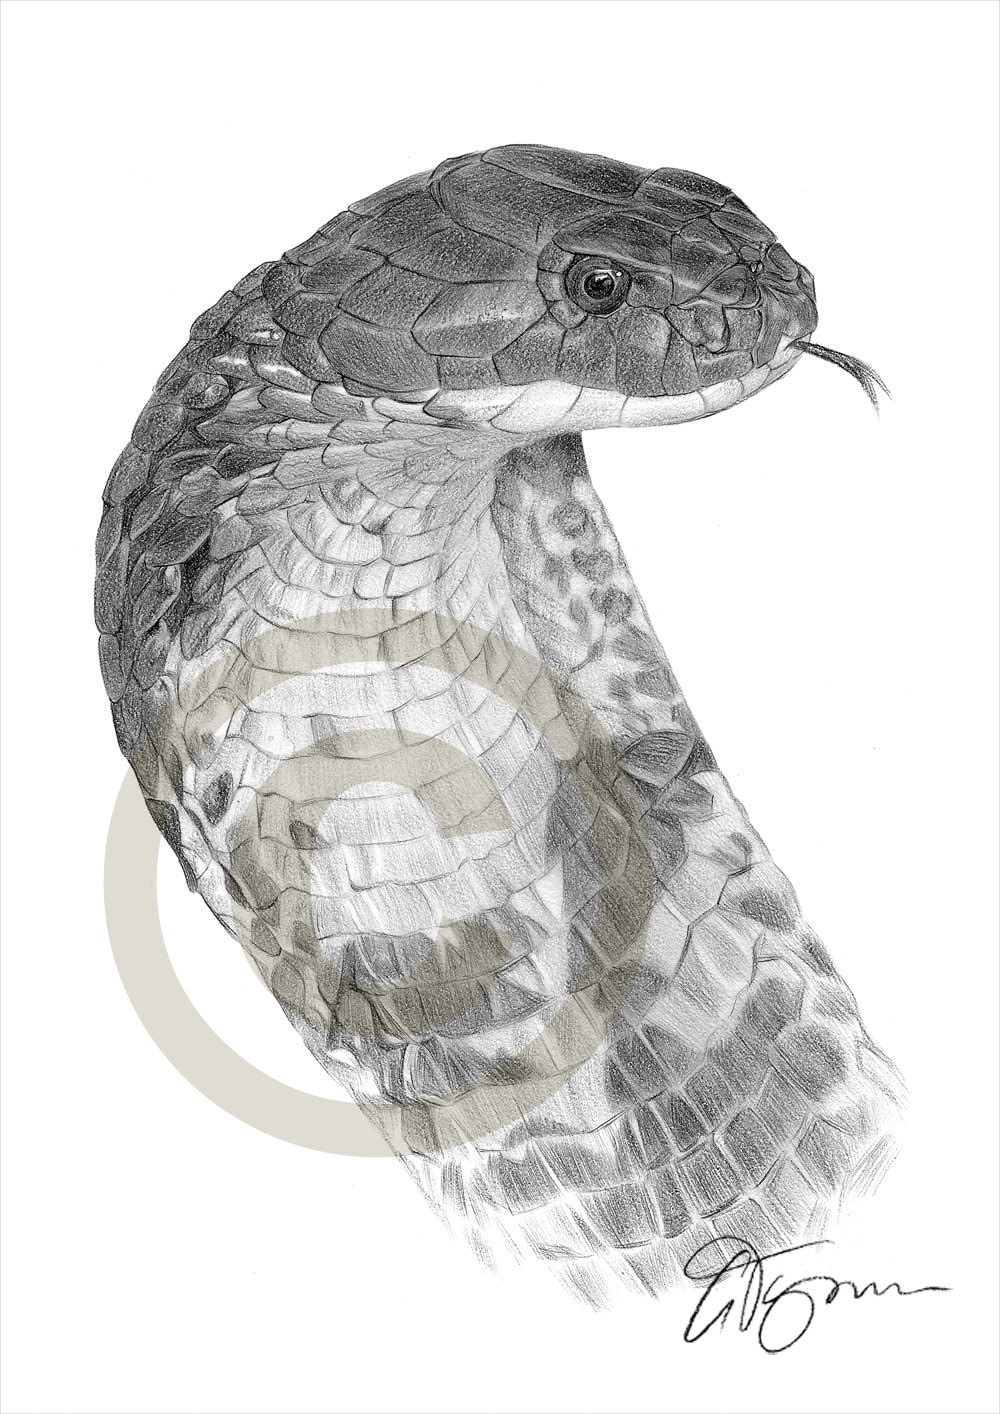 Snake King Cobra pencil drawing print A4 size artwork